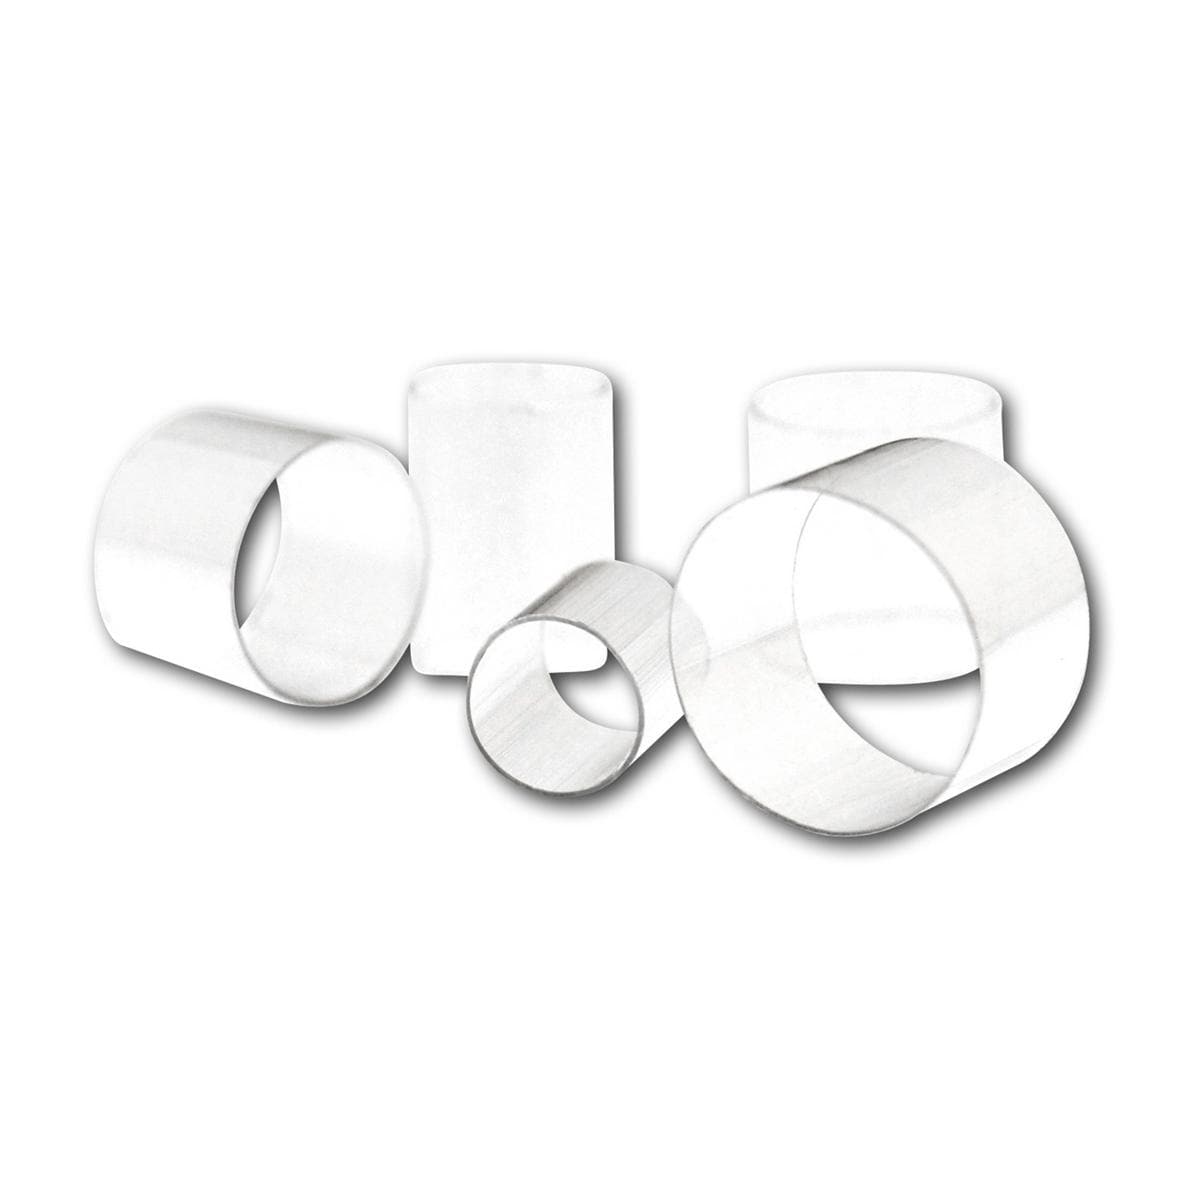 Transparent Ringe - Nachfüllpackung - Nr. 12, Packung 12 Stück